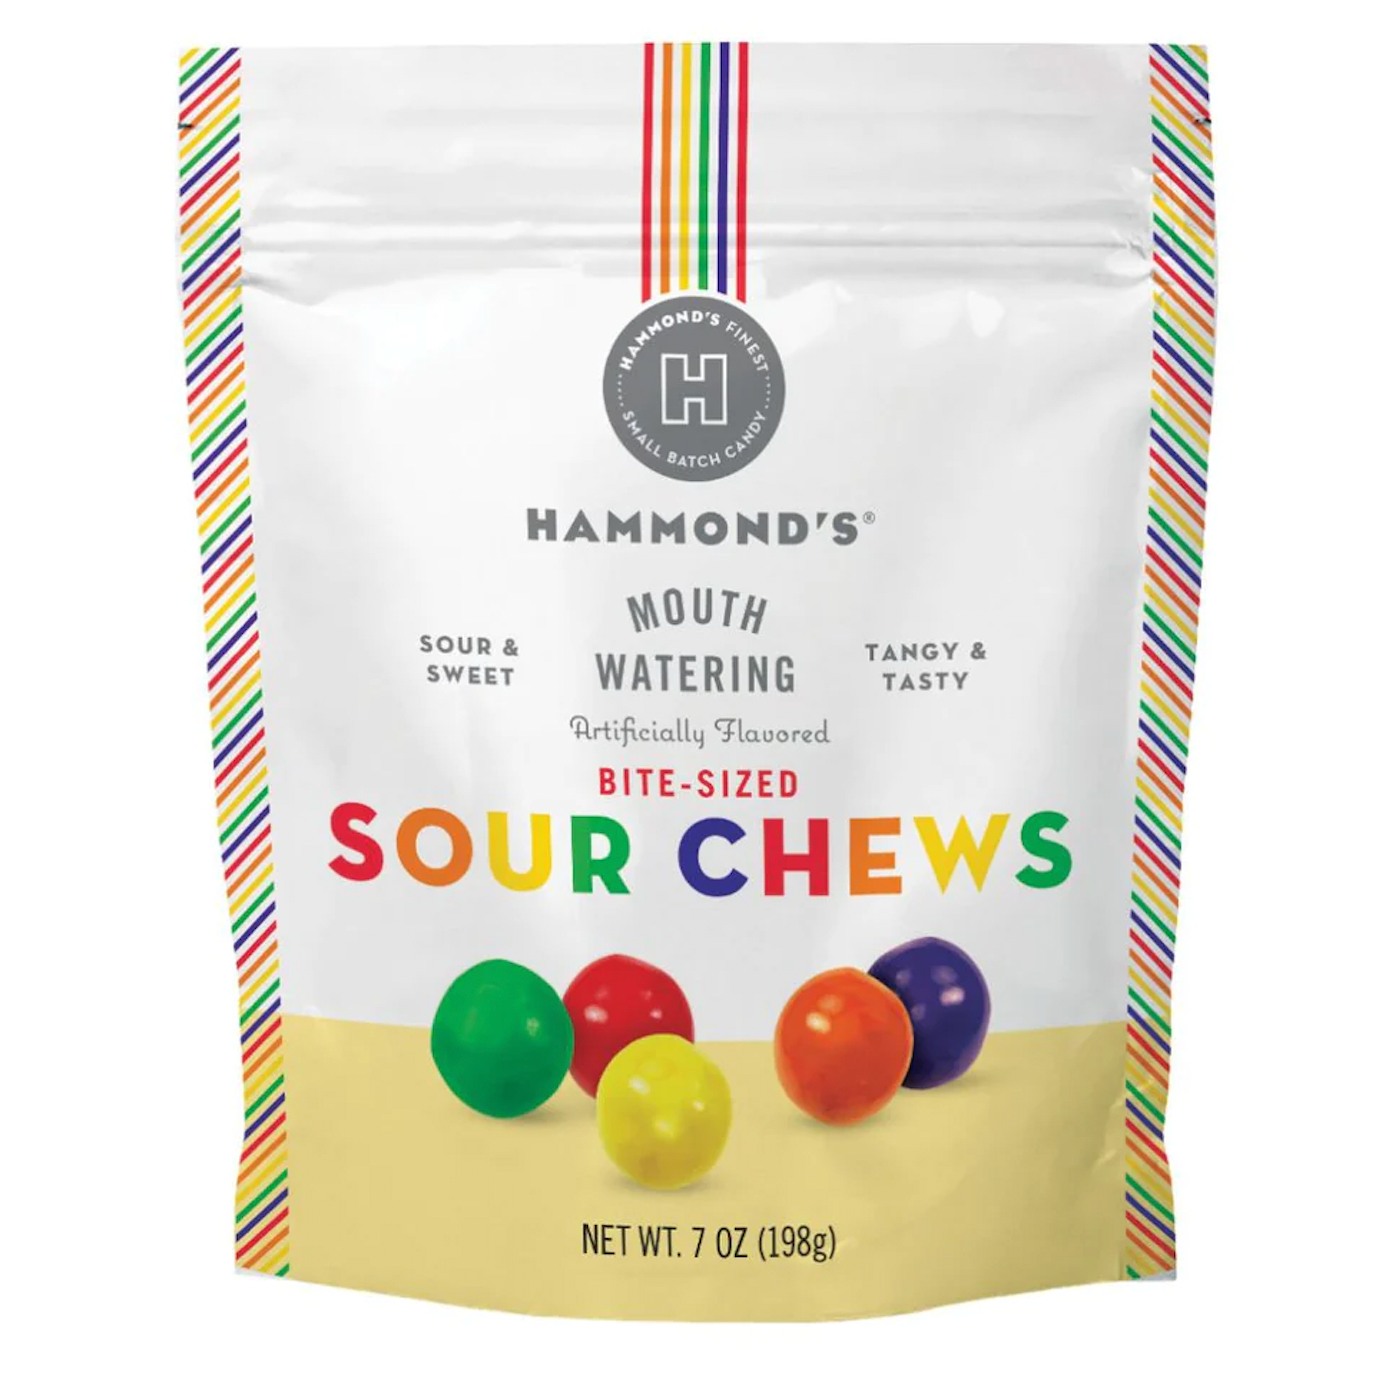 Hammond’s Sour Chews